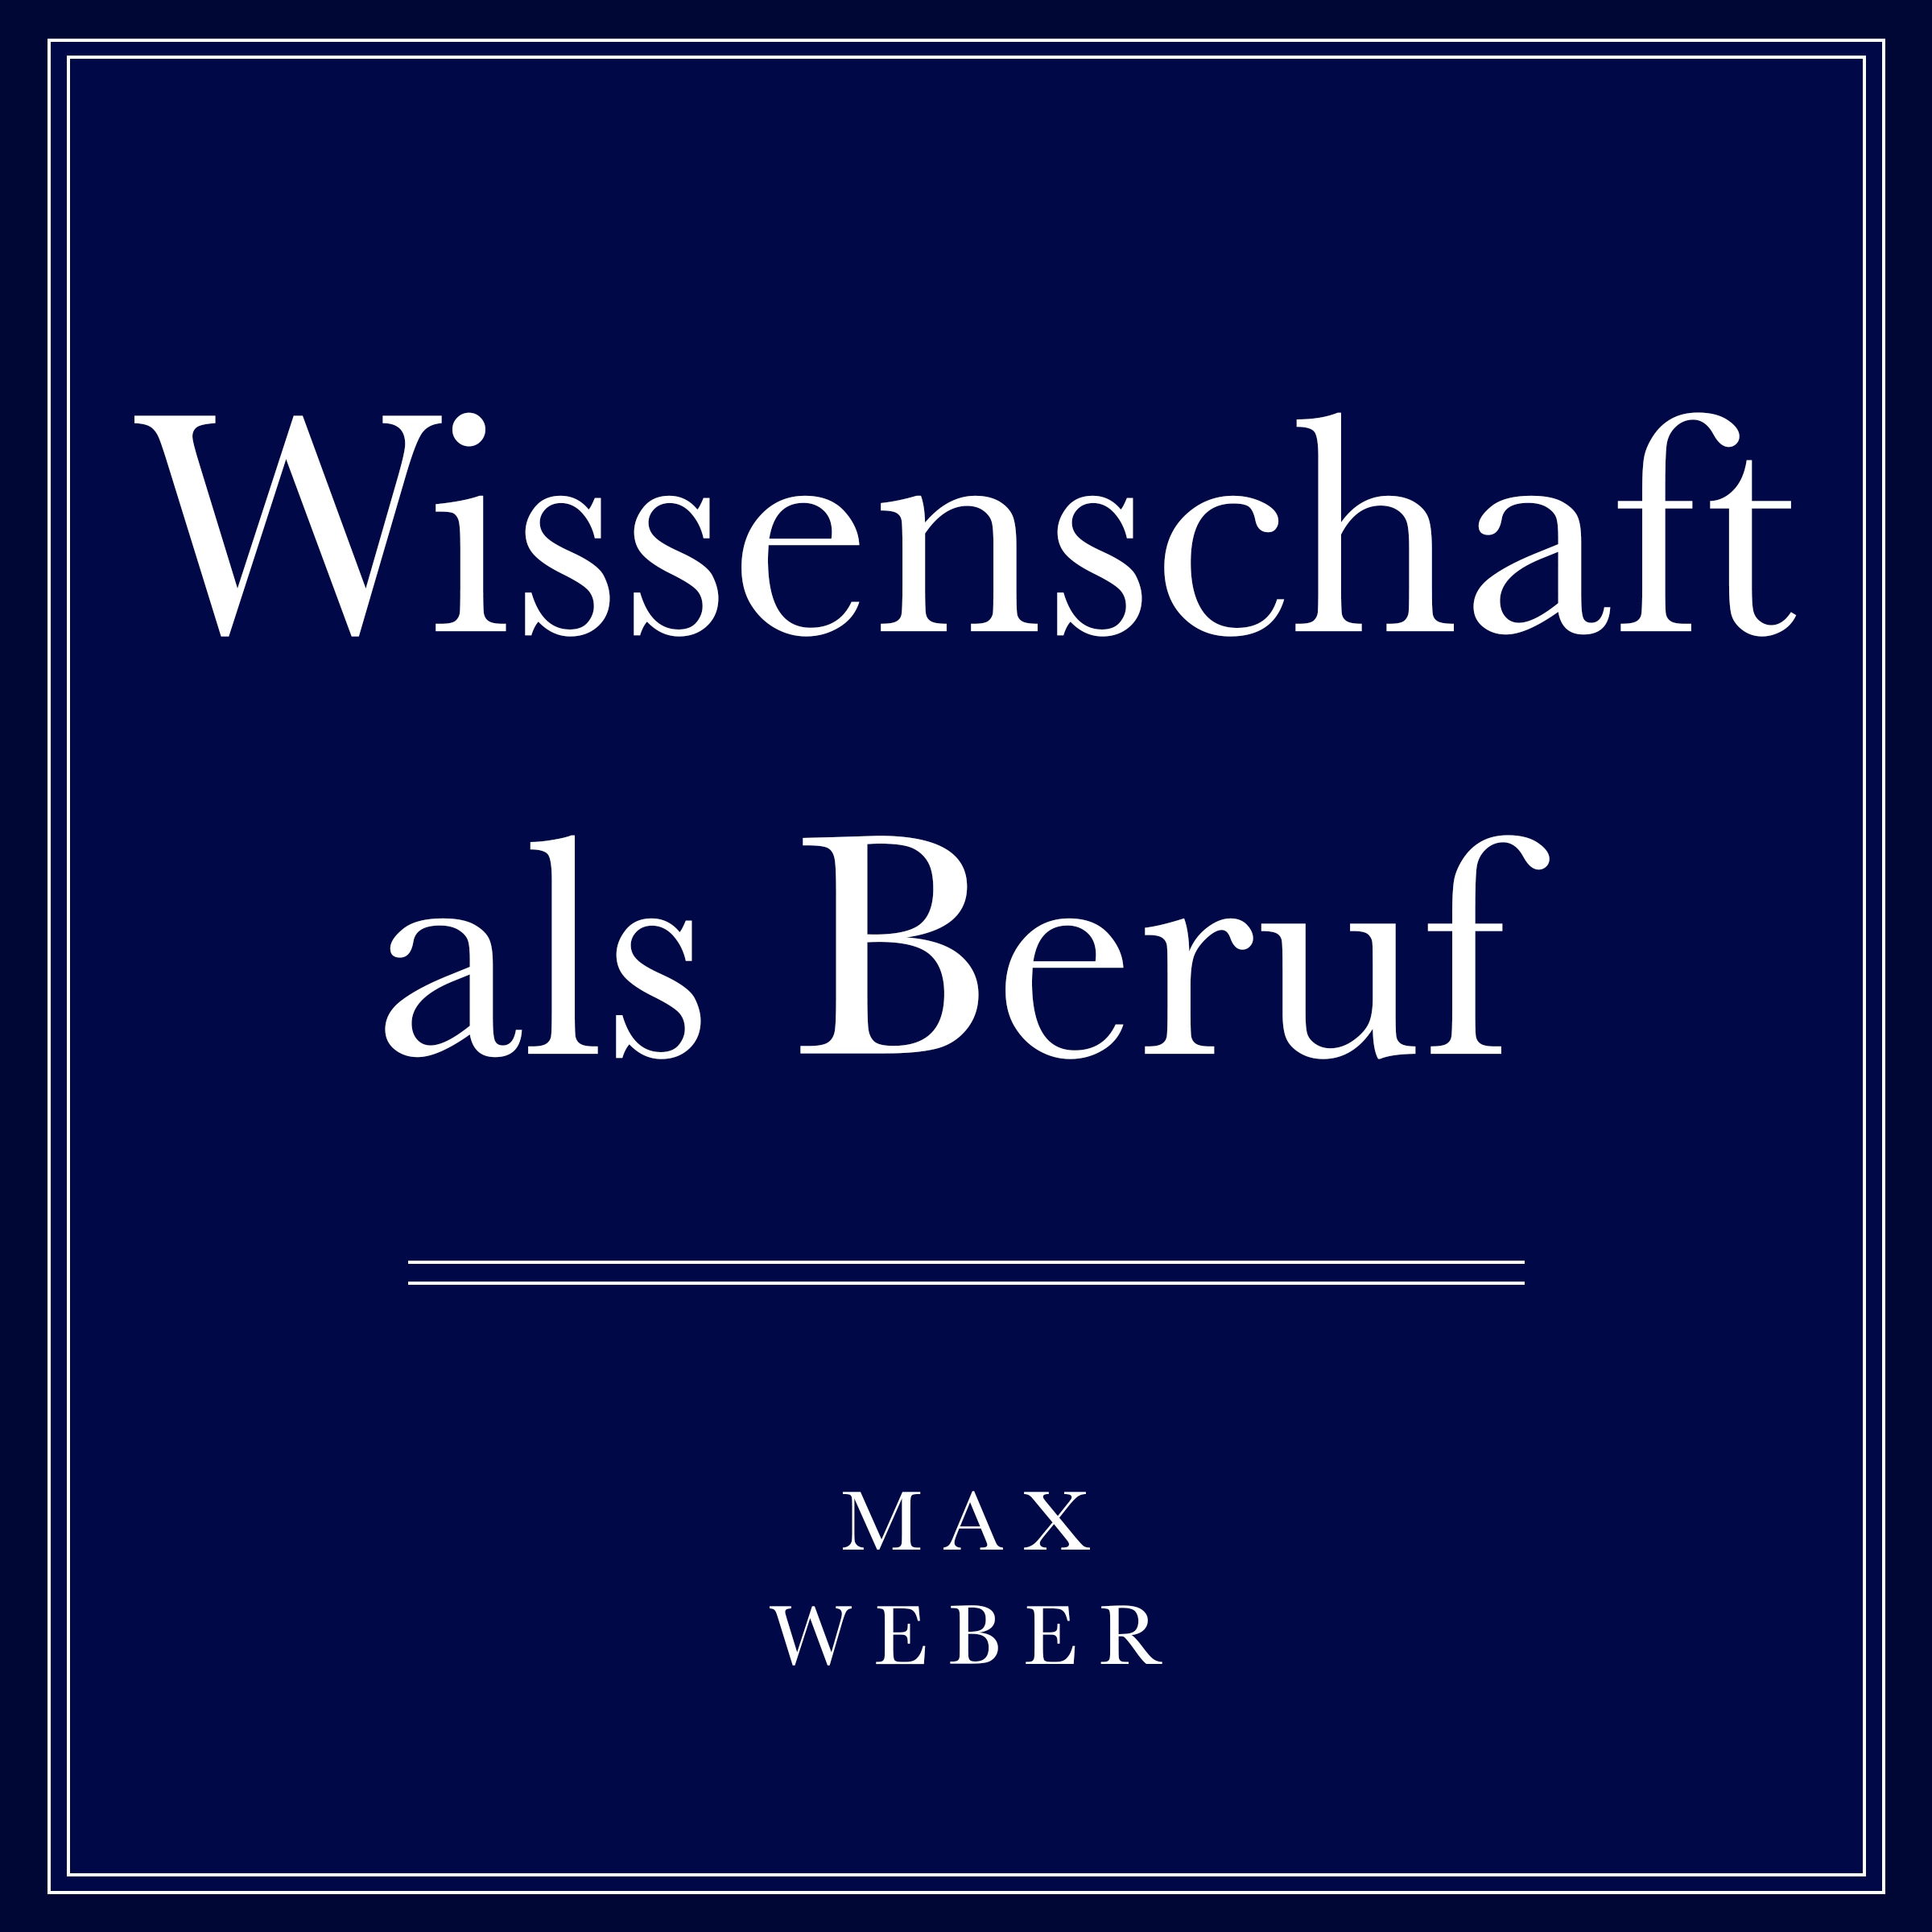 Wissenschaft als Beruf Audiobook by Max Weber